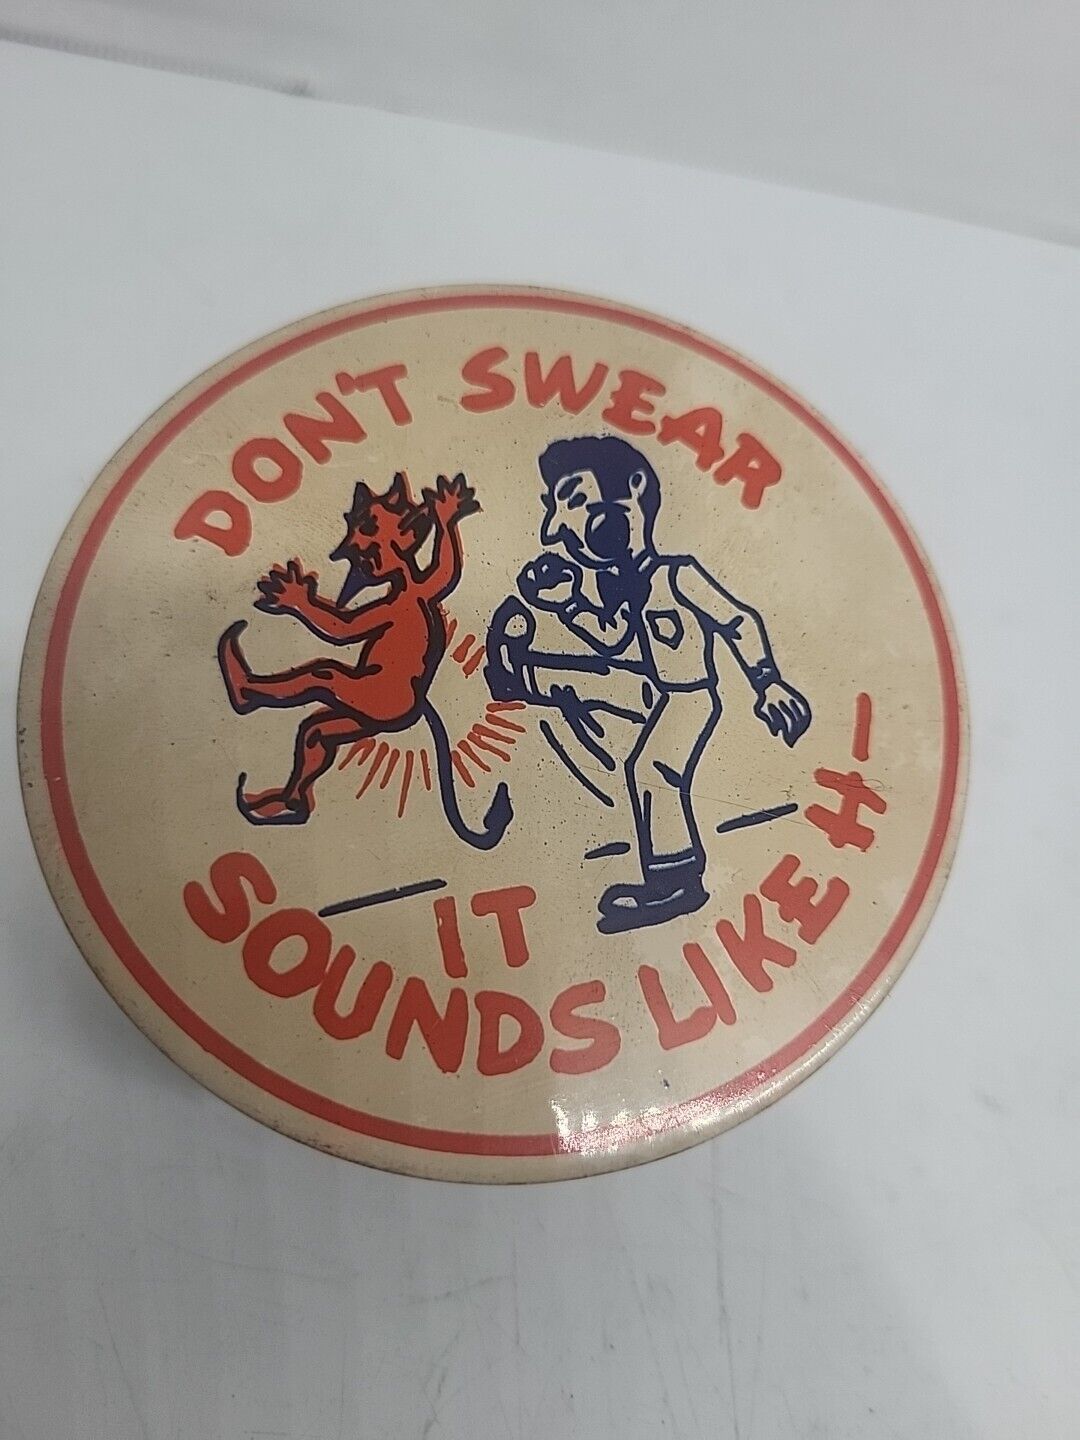 Don’t Swear Devil Cussing Swearing Bad Words Vintage Button Pin Badge Pinback